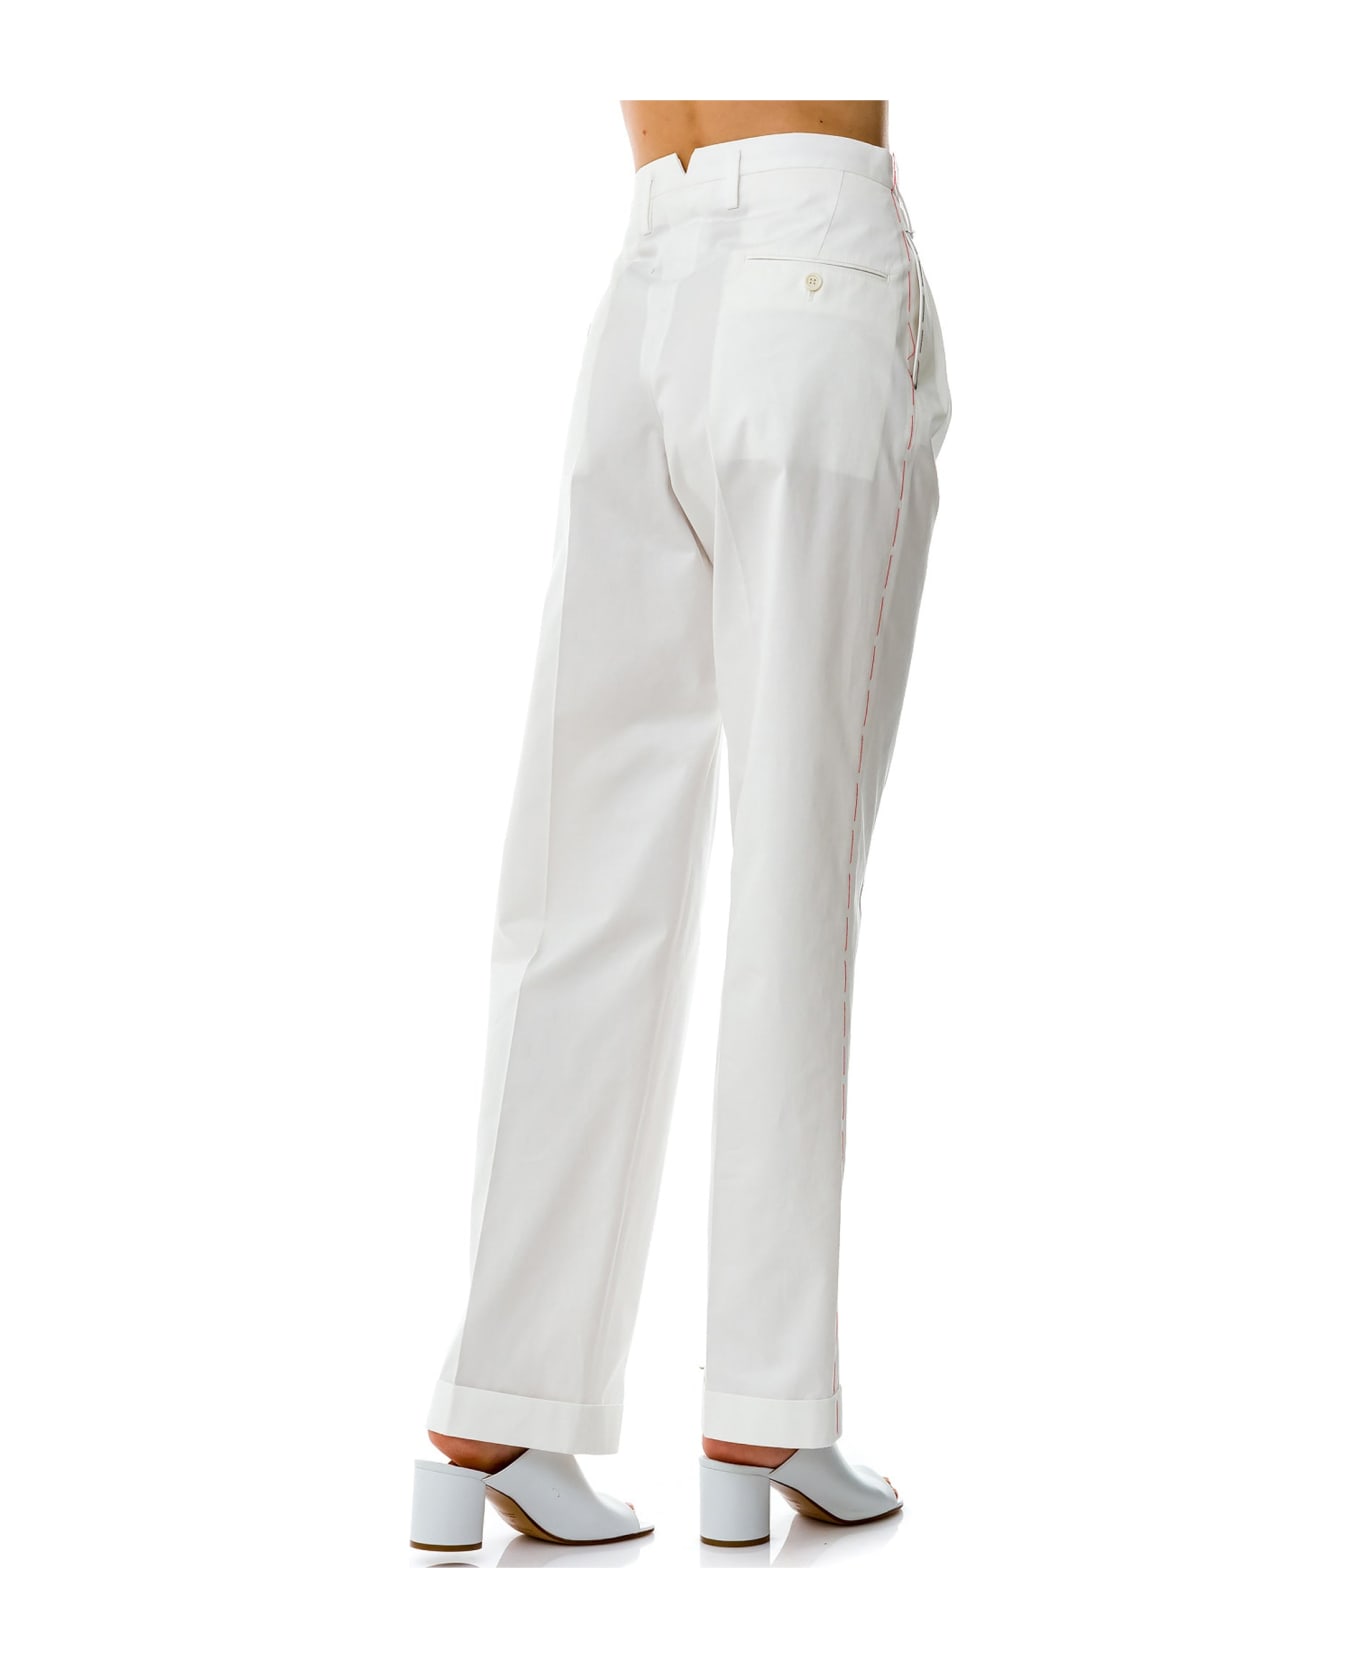 Maison Margiela Cotton Trousers - White